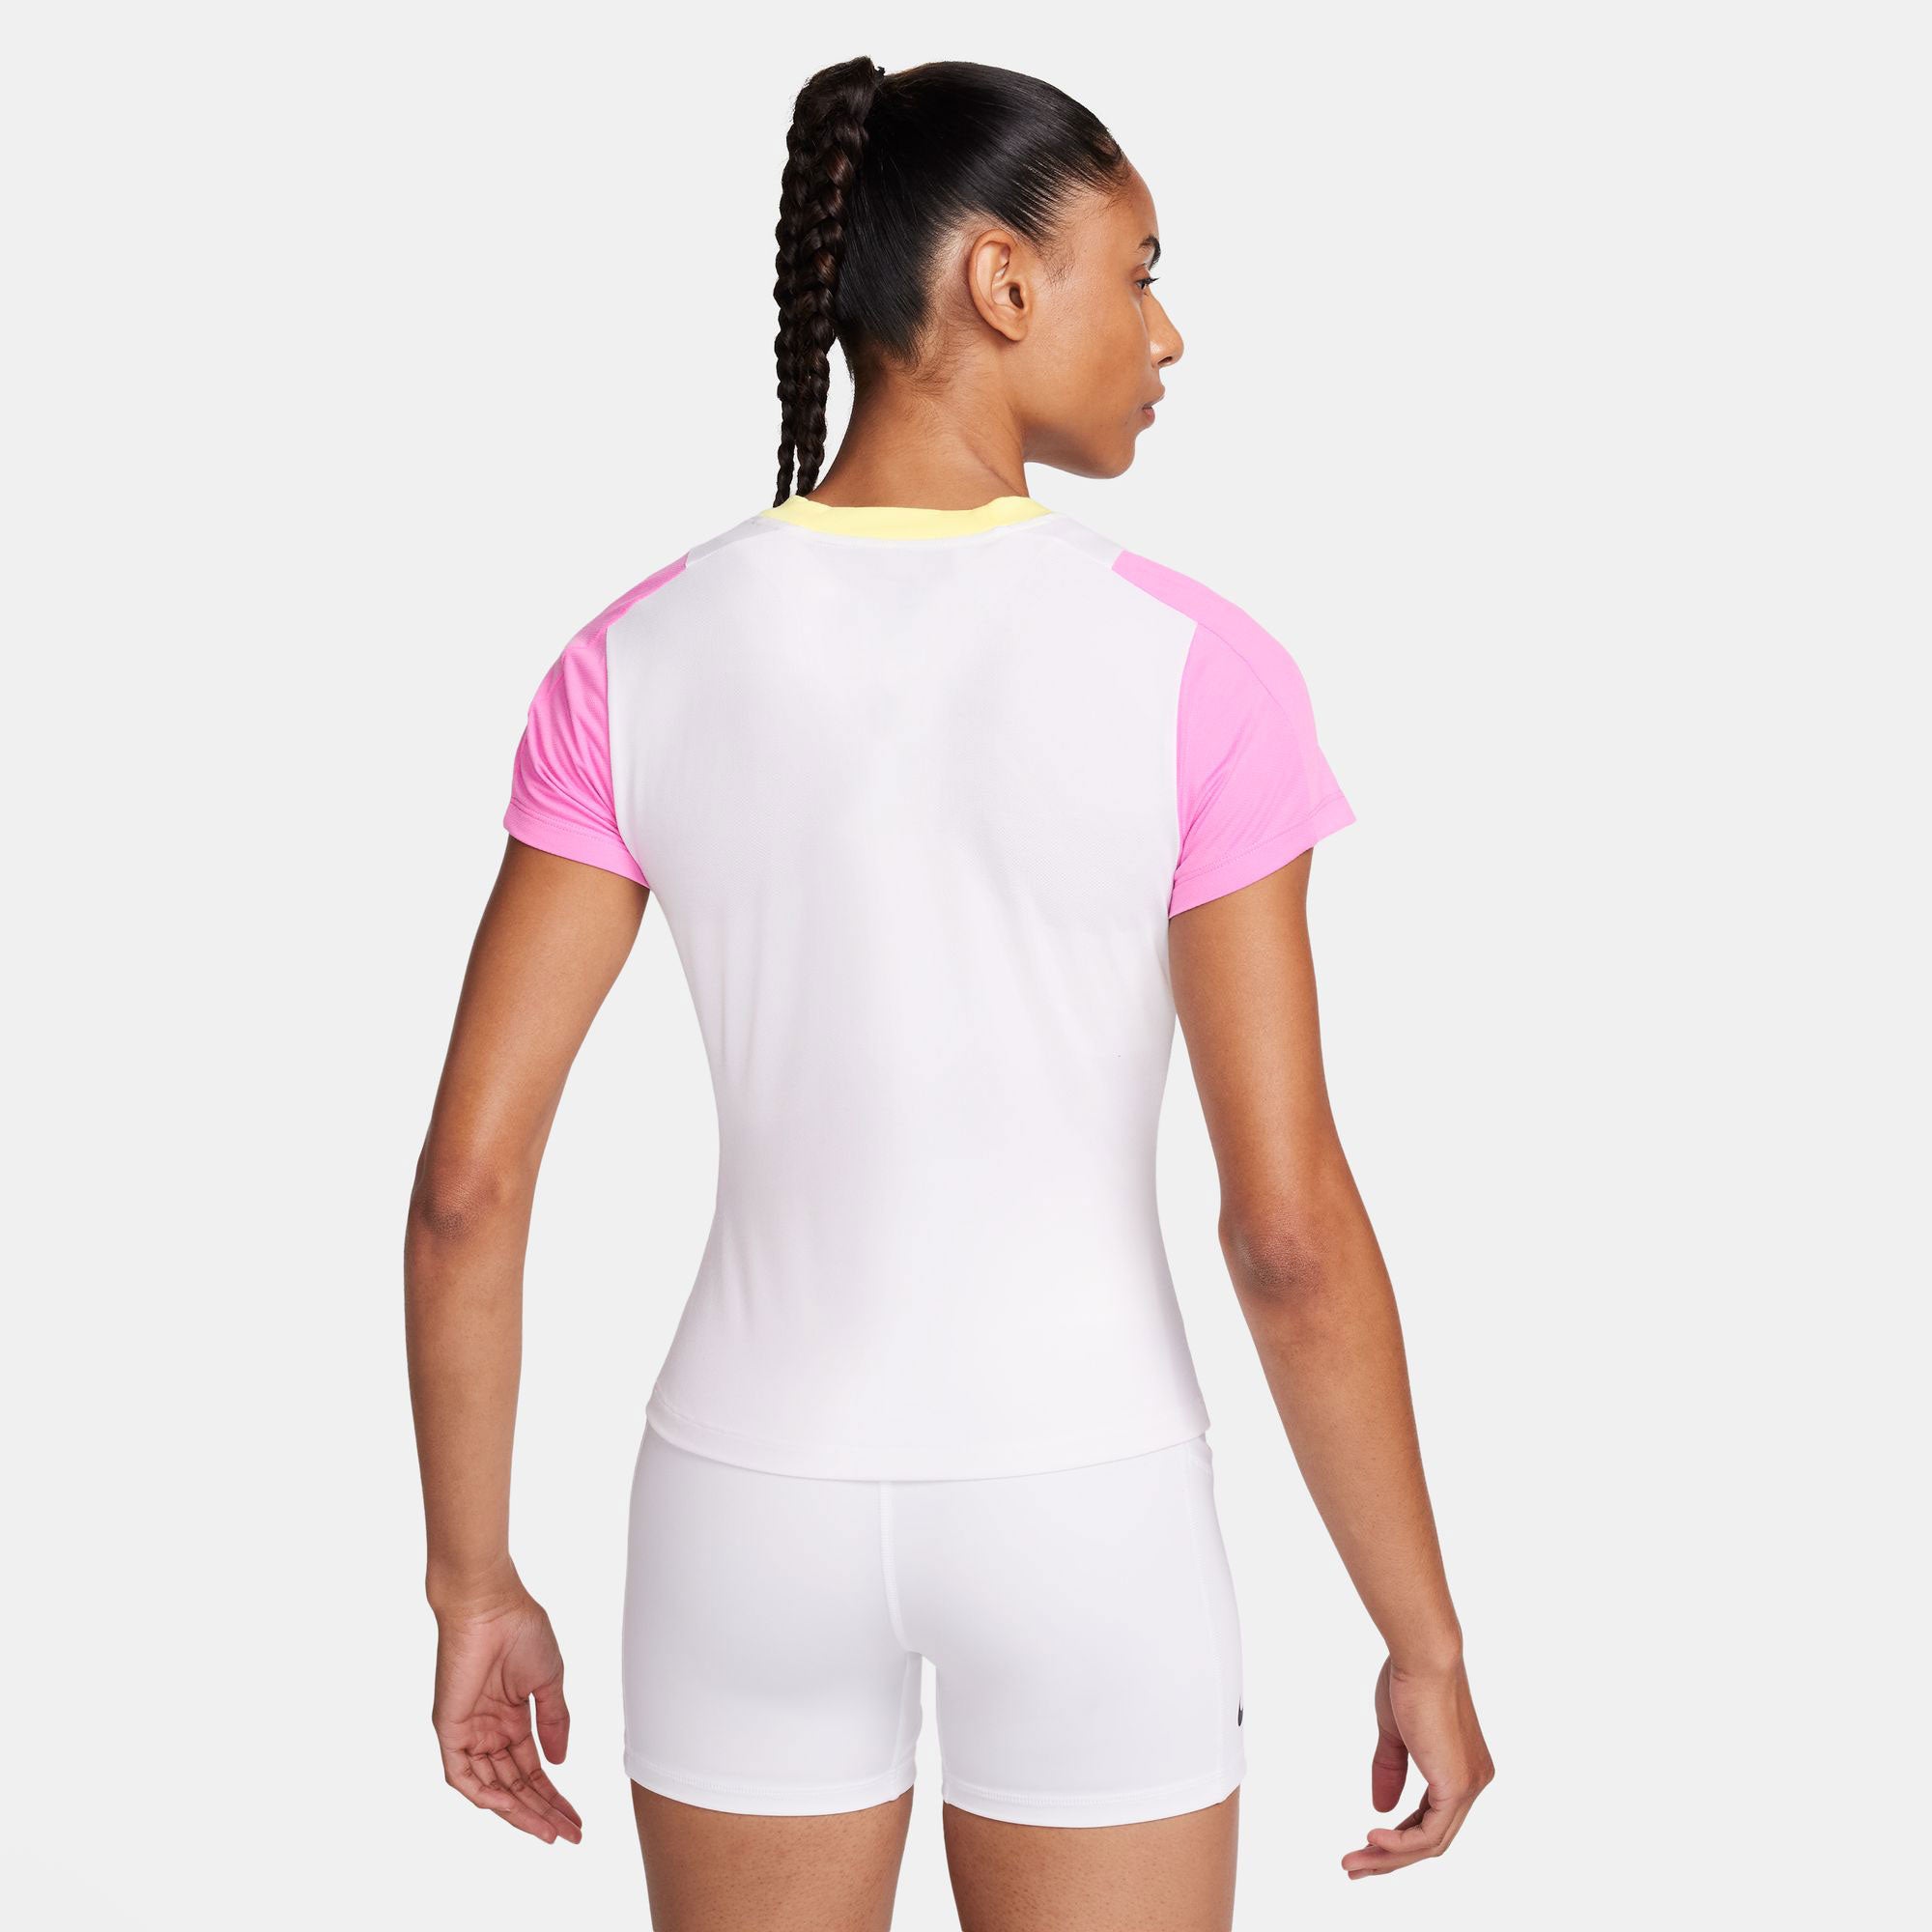 Nike Dri-Fit One Slim Tank W - active pink/white, Tennis Zone